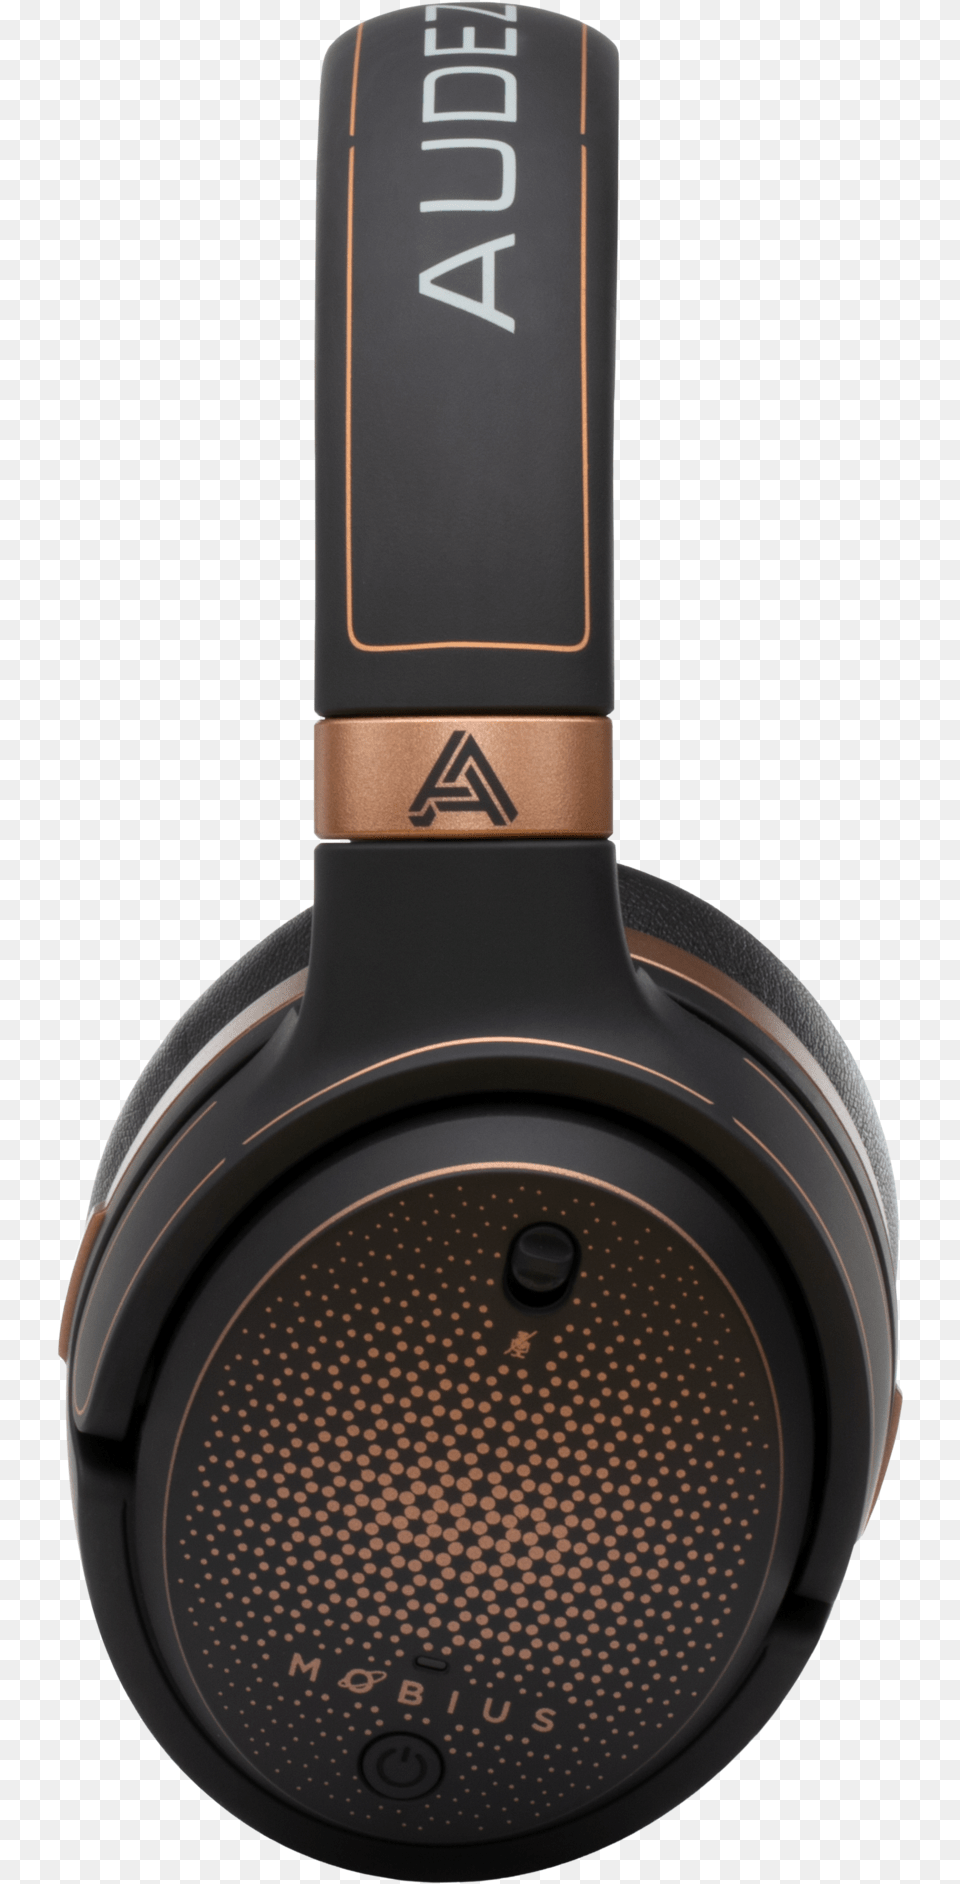 Audeze Mobius Headphonesclass Headset Gaming, Electronics, Headphones Png Image